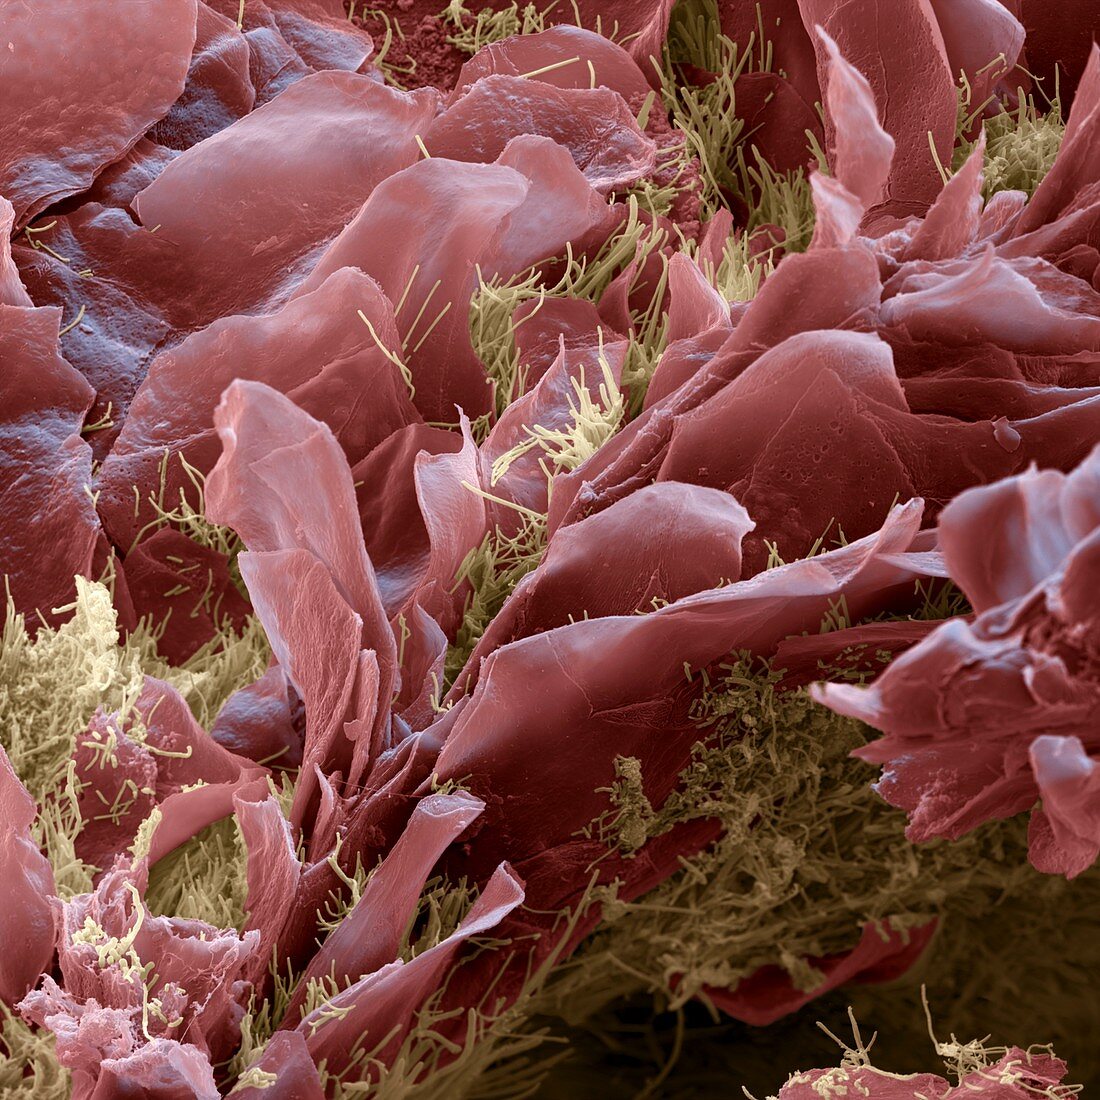 Human tongue surface with bacteria, SEM